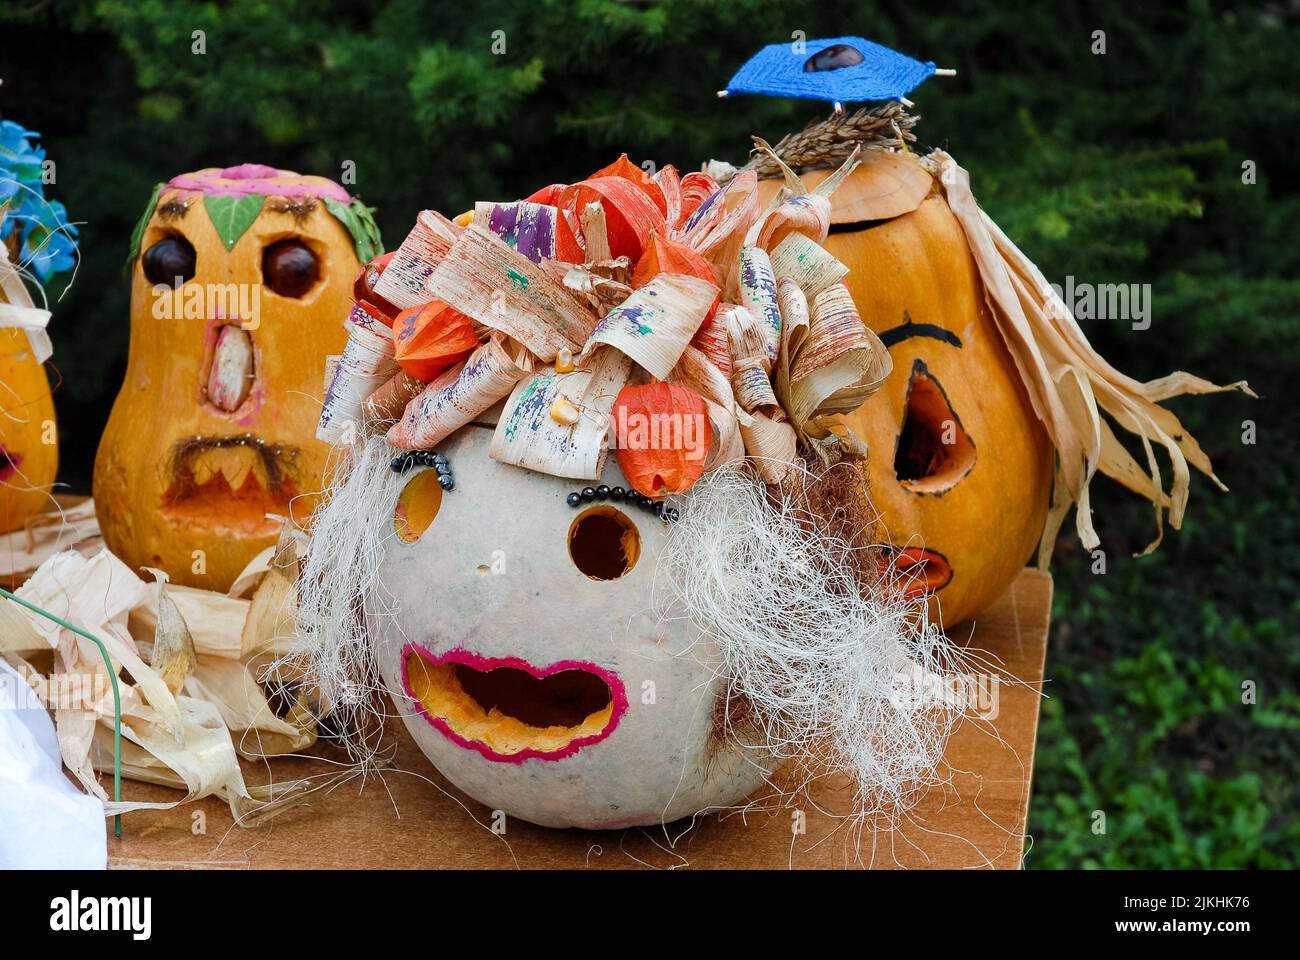 A close-up of funny Halloween pumpkins Stock Photo